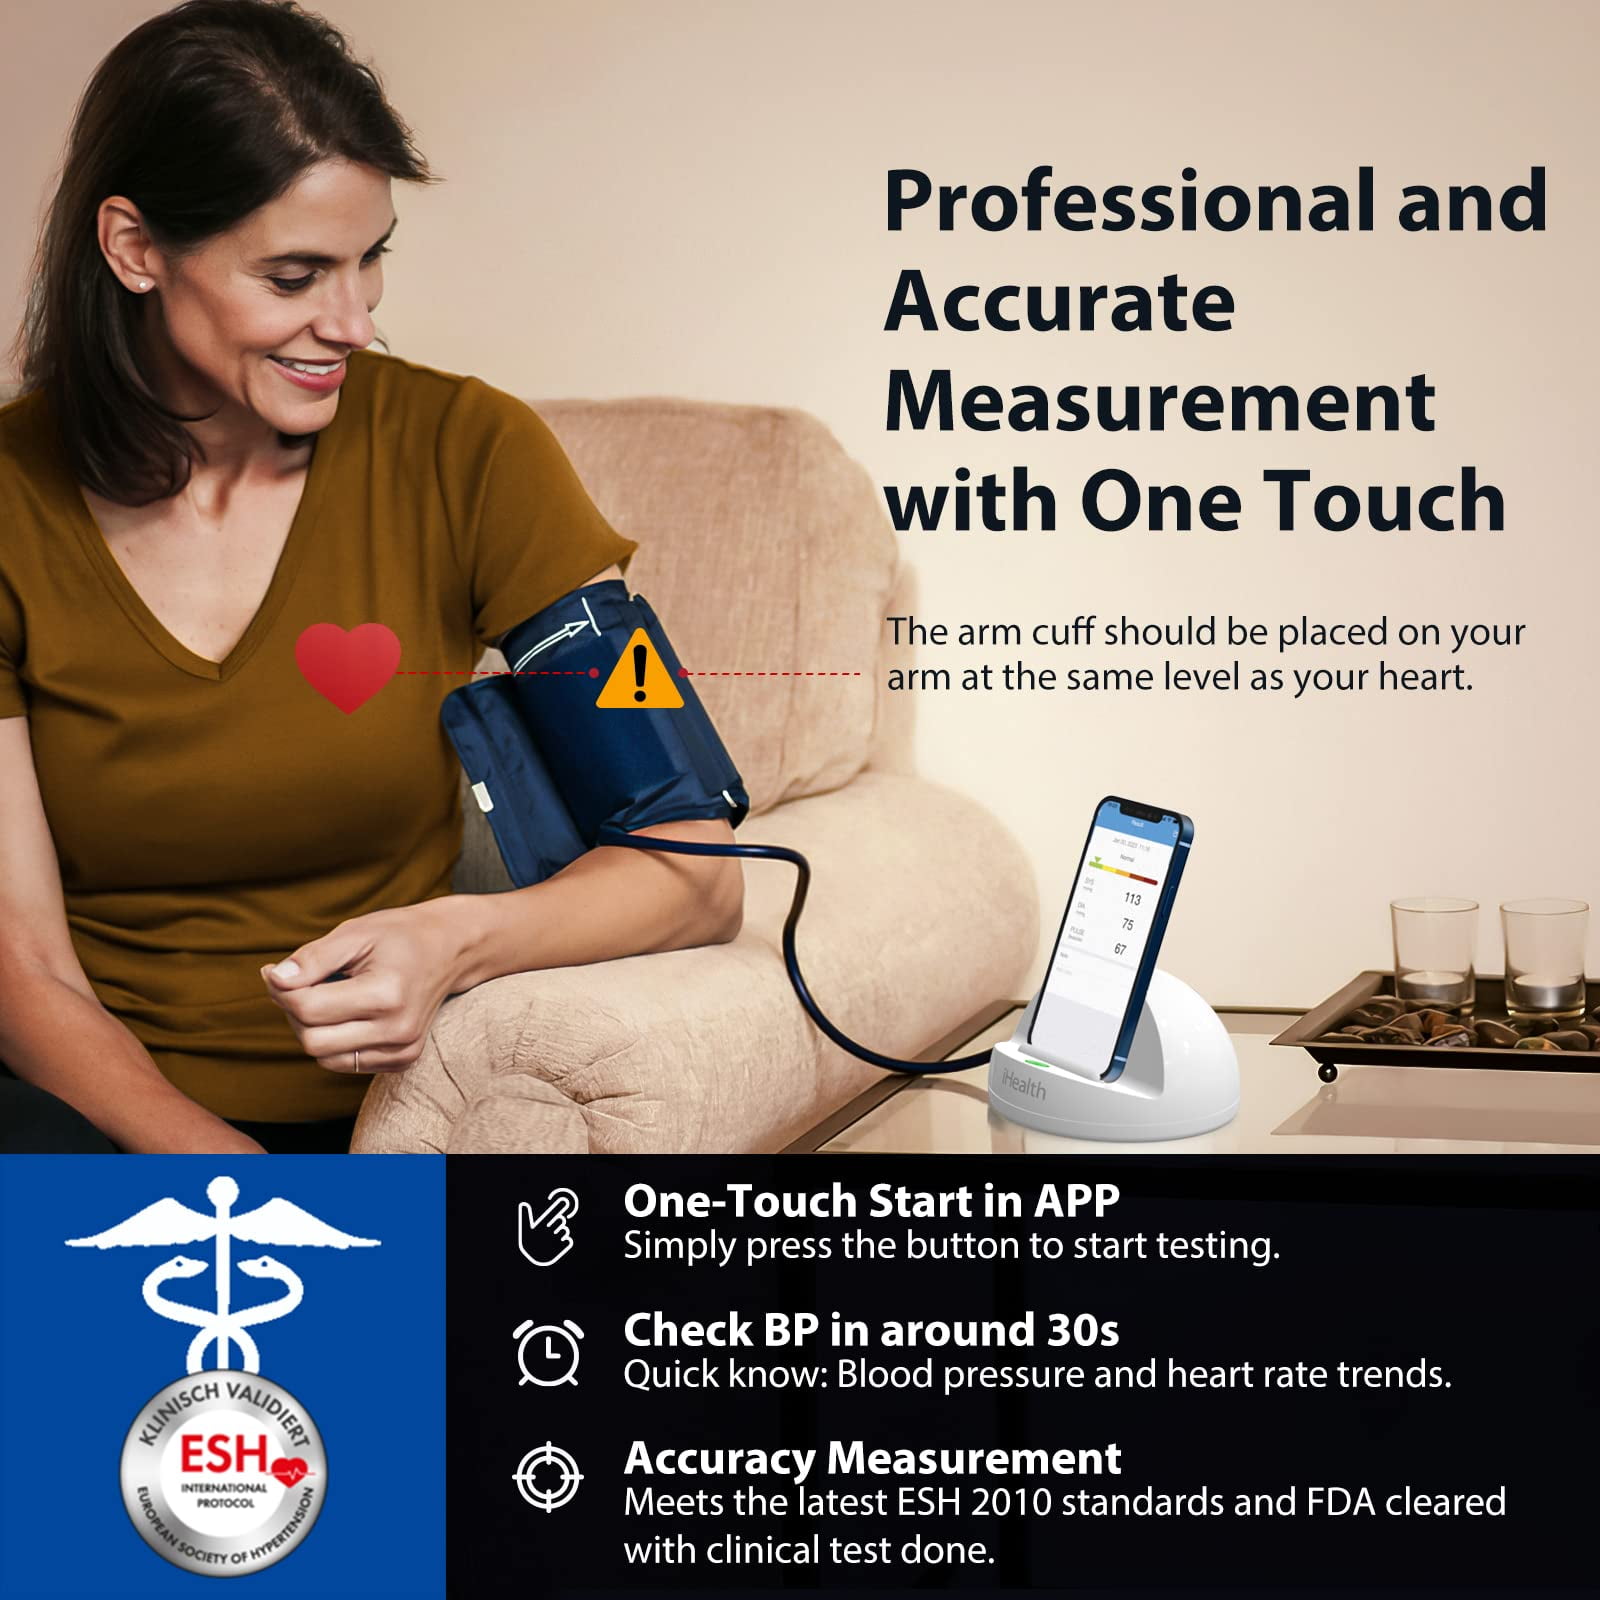 iHealth® Ease Wireless Blood Pressure Monitor, Large Cuff